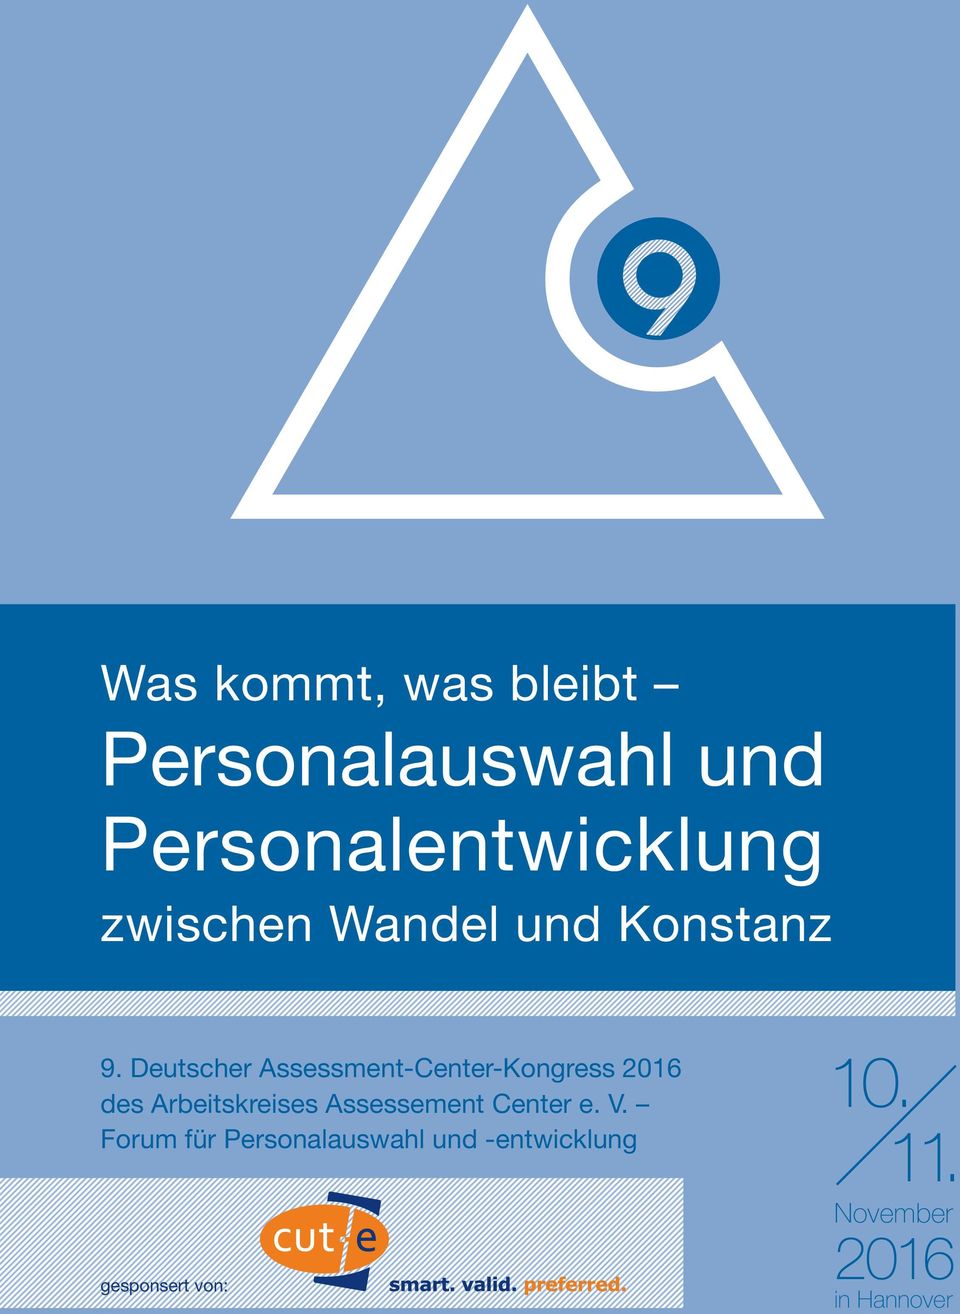 Deutscher Assessment-Center-Kongress 2016 des Arbeitskreises